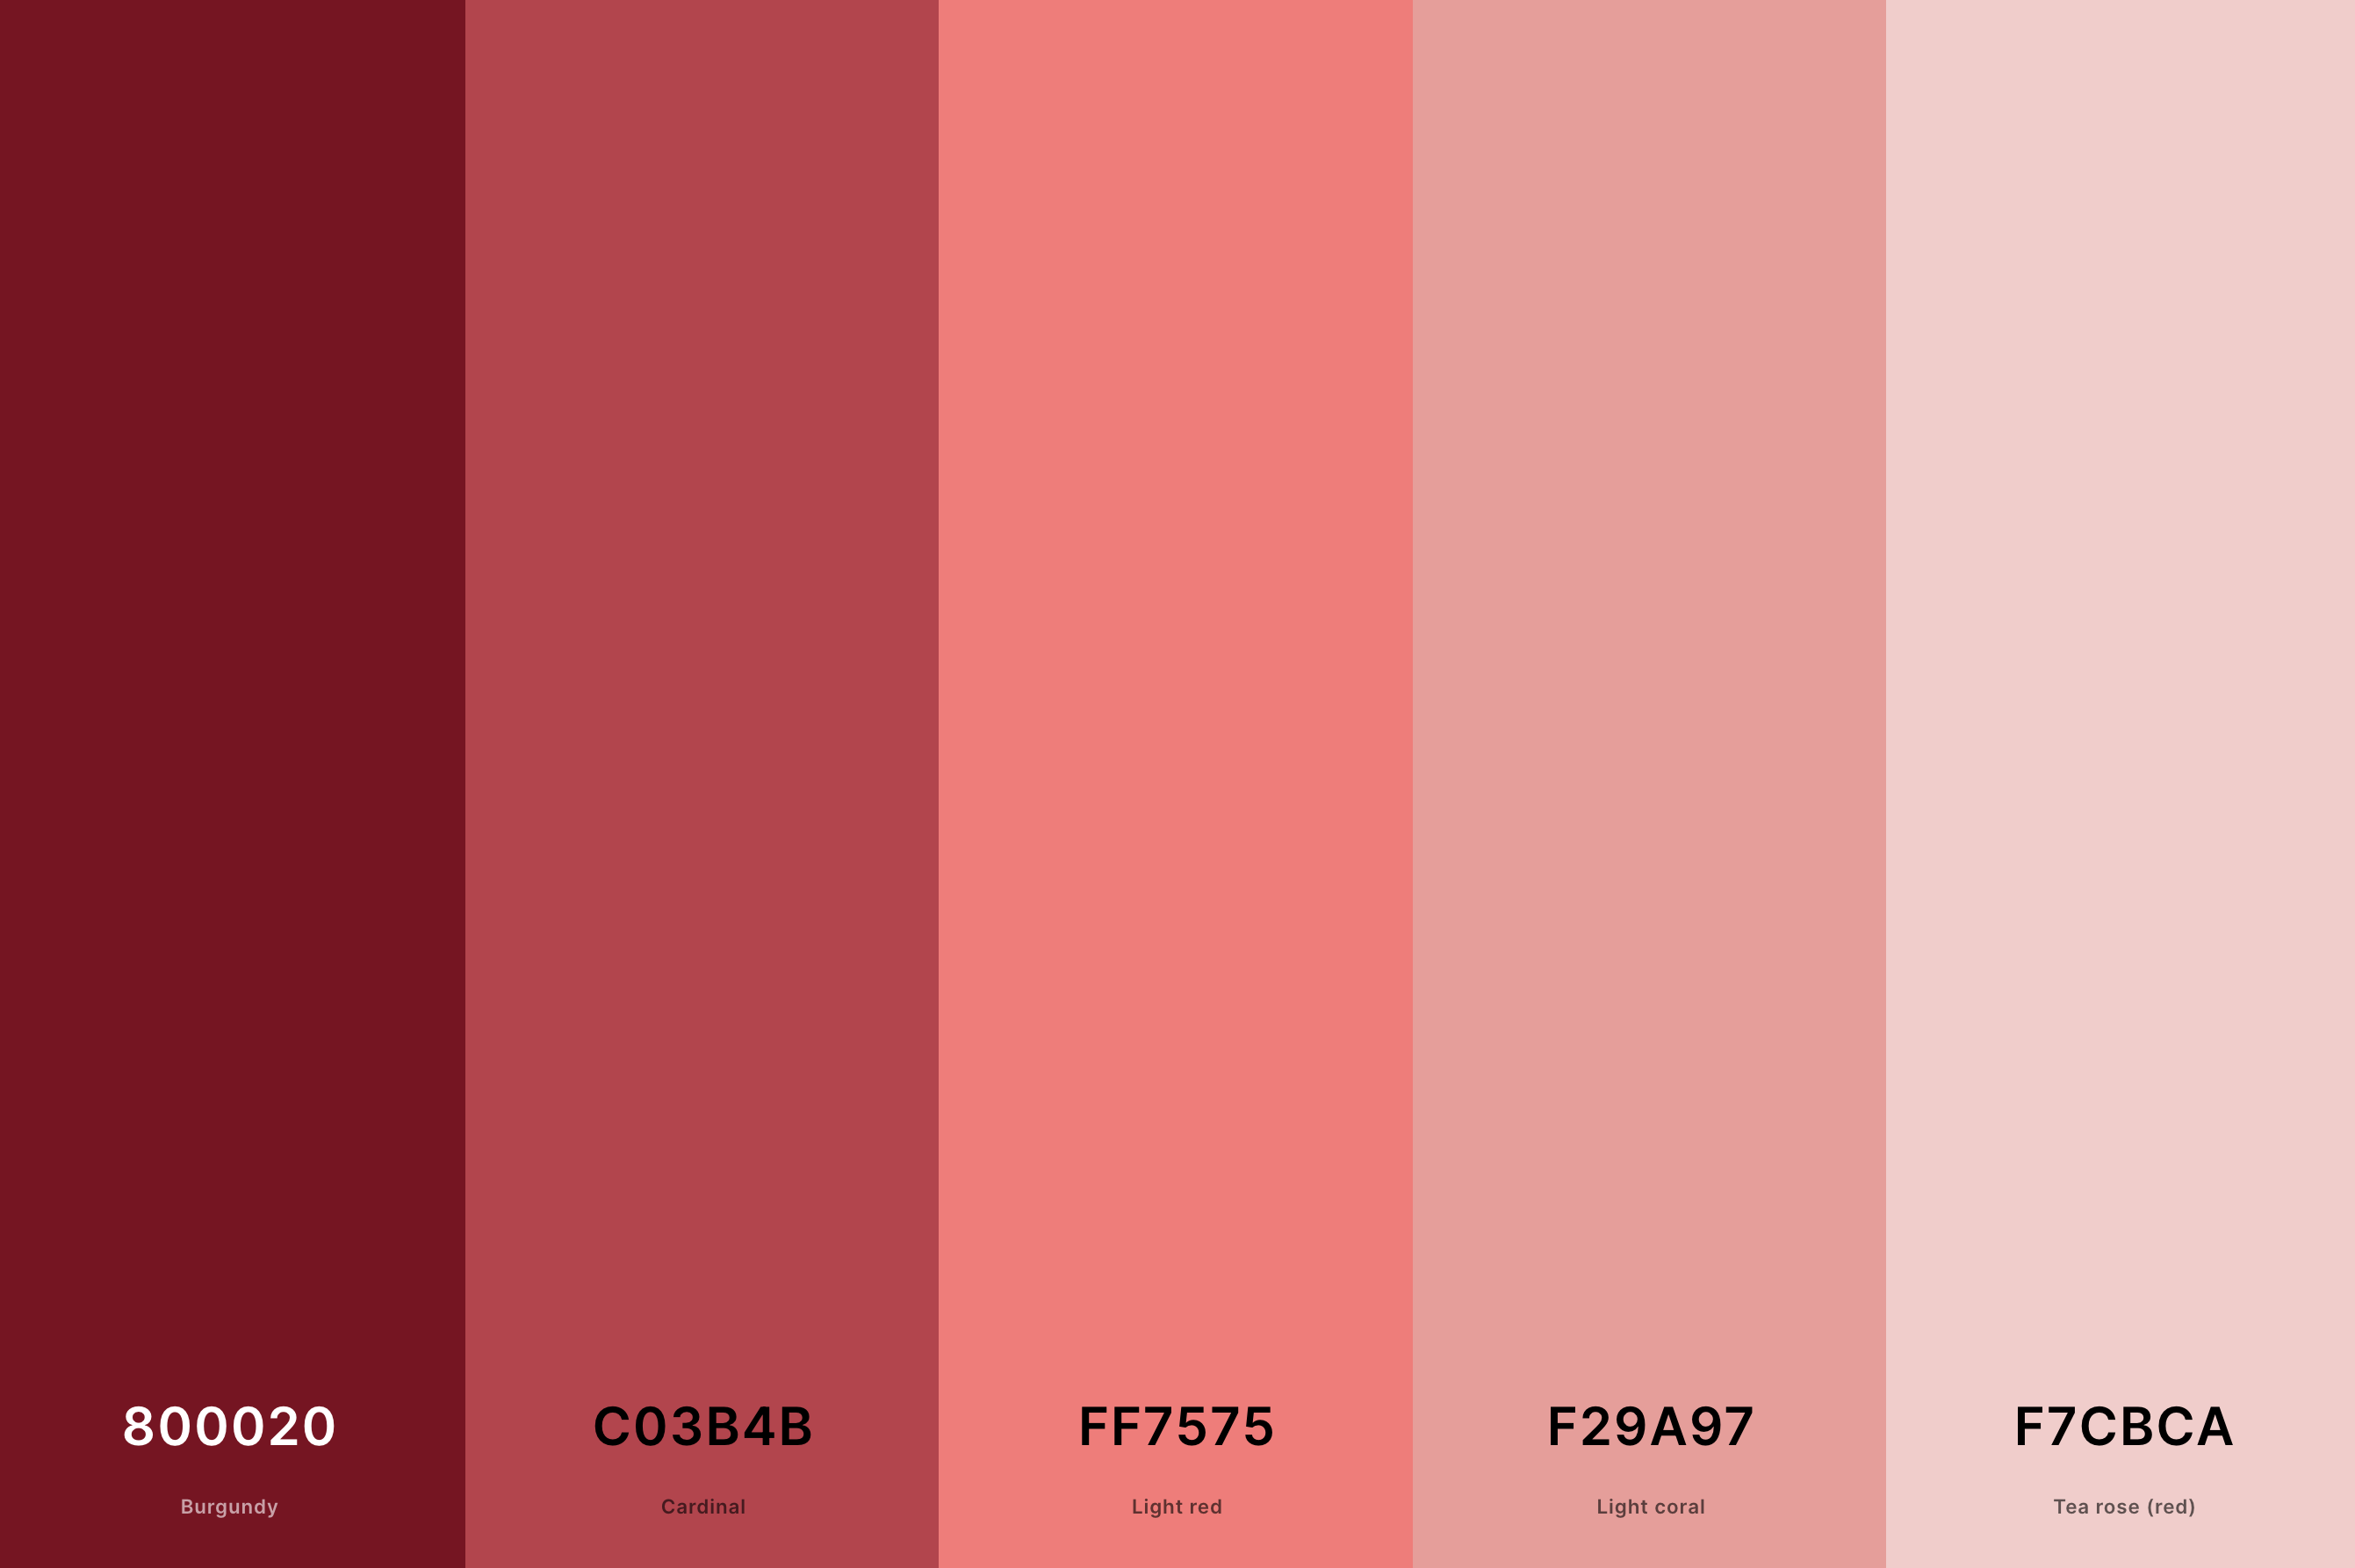 15. Rose Gold And Burgundy Color Palette Color Palette with Burgundy (Hex #800020) + Cardinal (Hex #C03B4B) + Light Red (Hex #FF7575) + Light Coral (Hex #F29A97) + Tea Rose (Red) (Hex #F7CBCA) Color Palette with Hex Codes